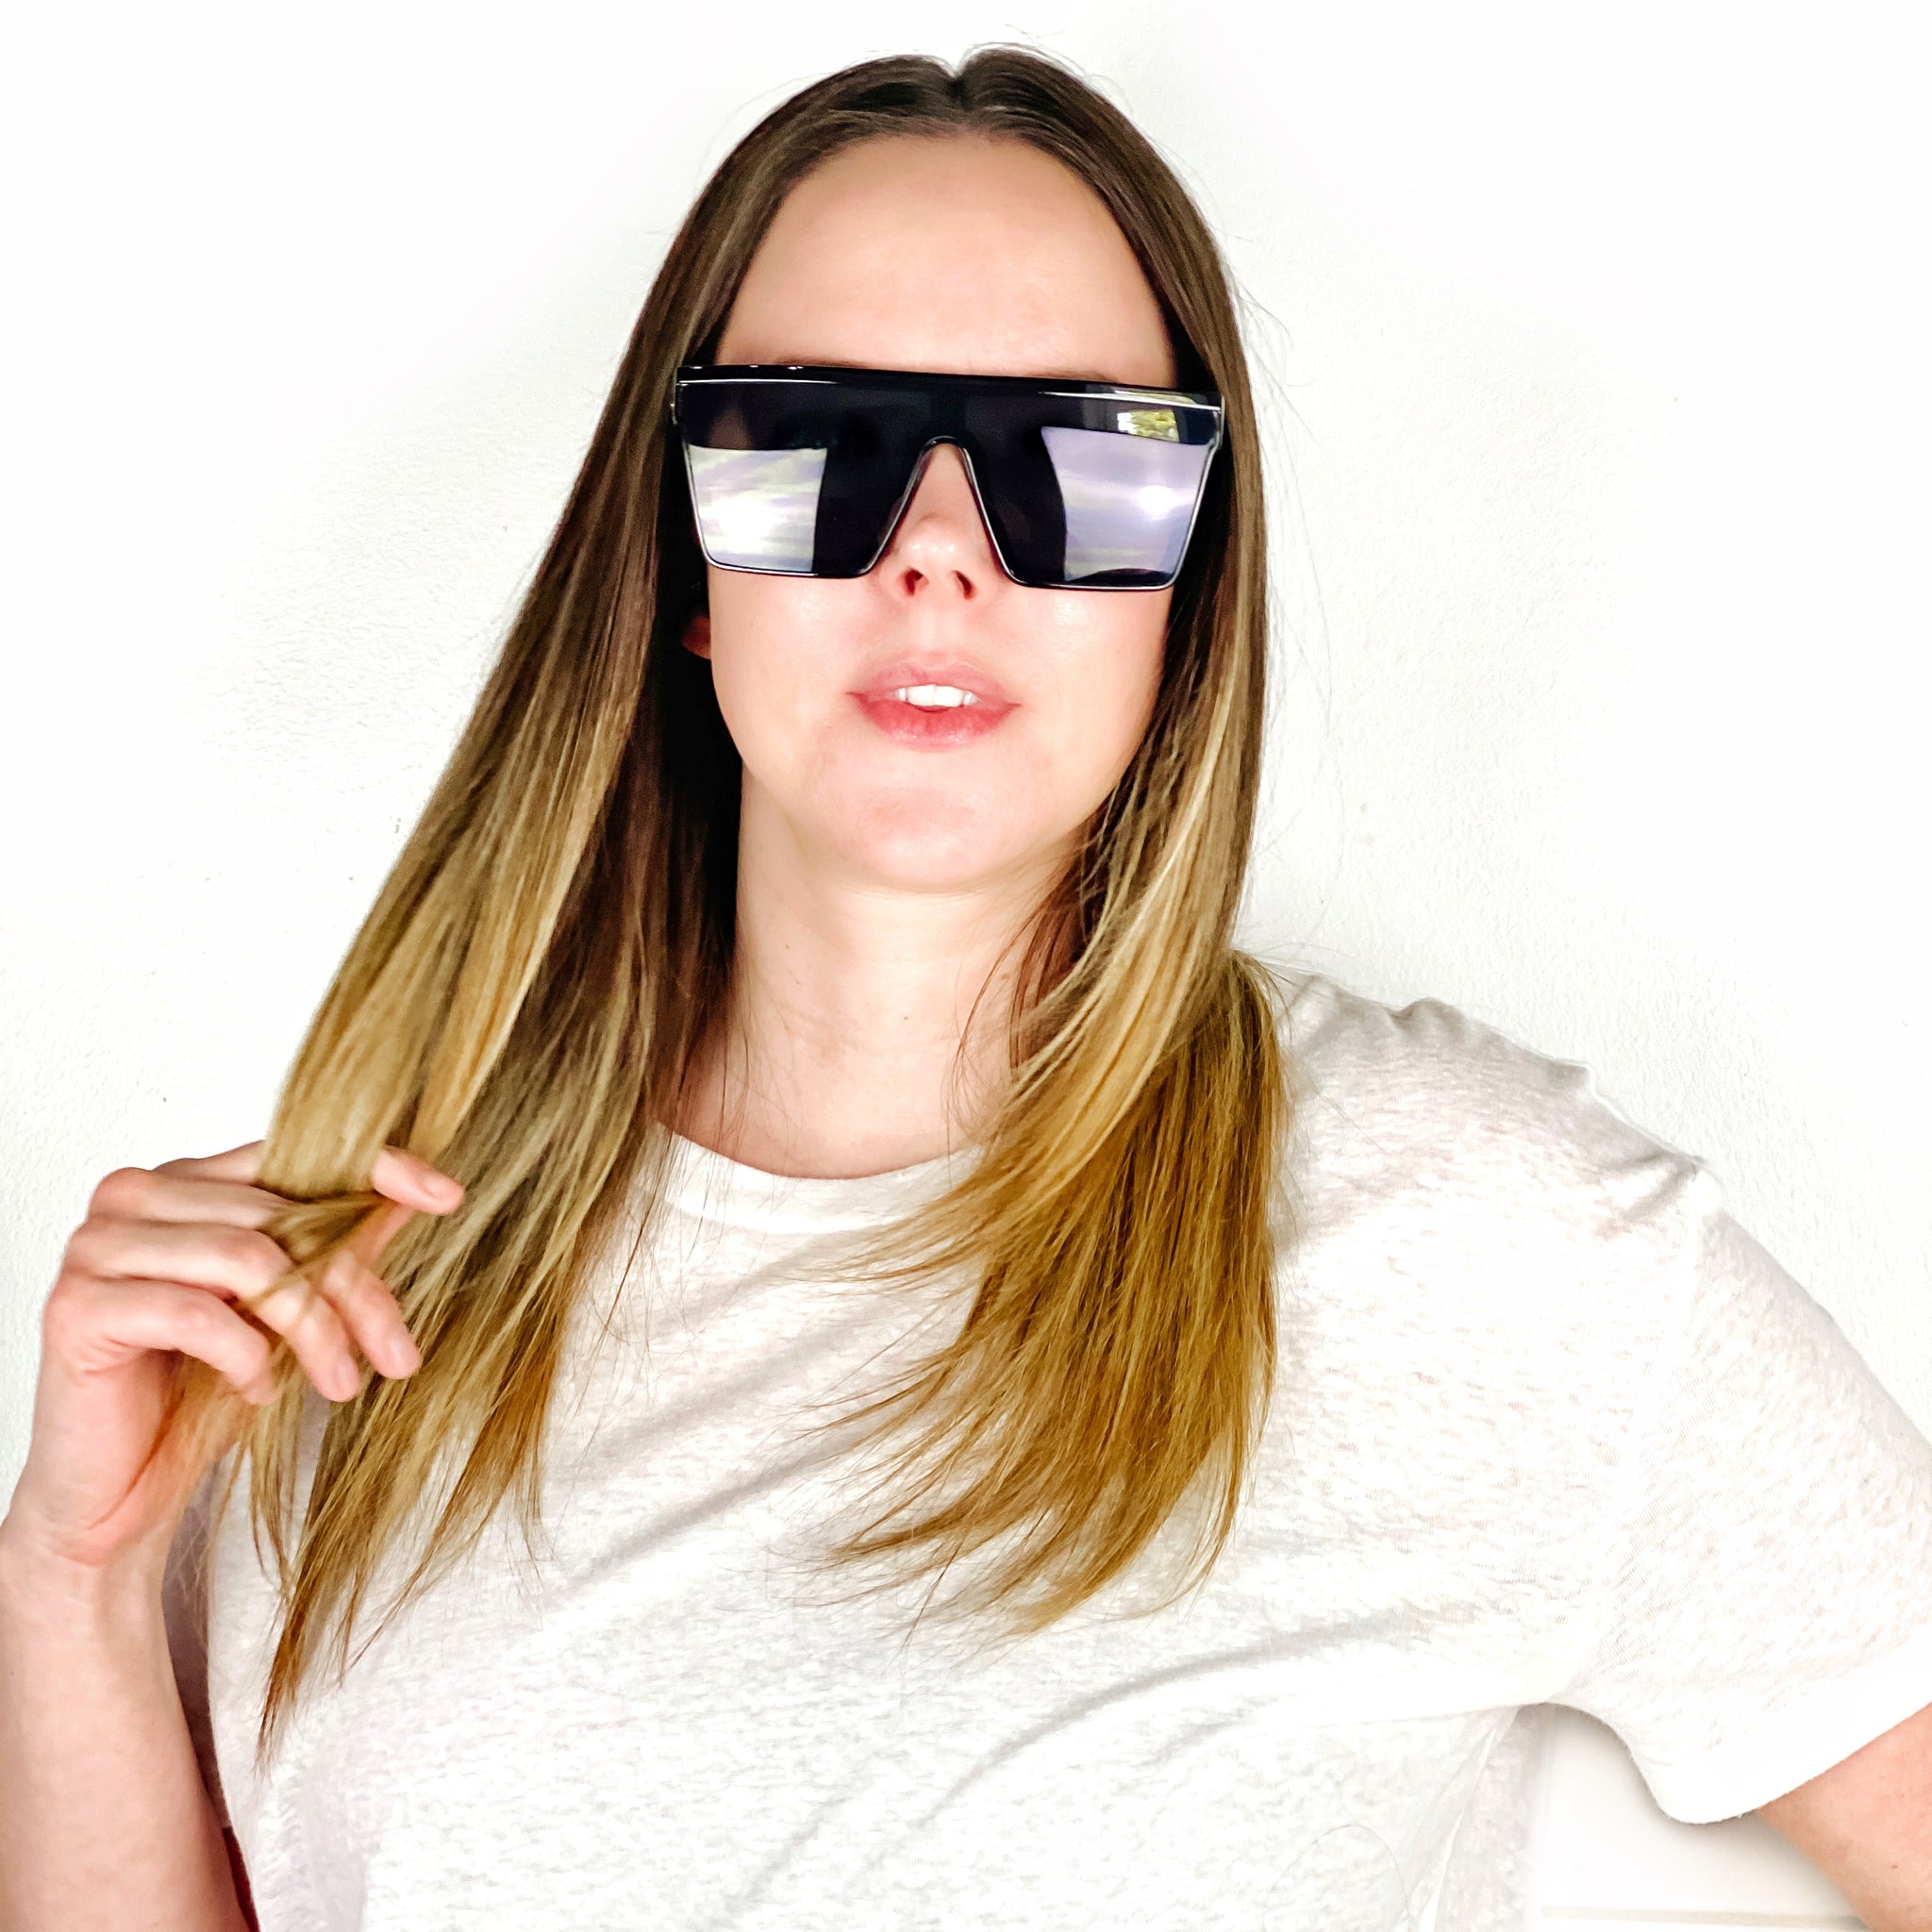 Mood Square Frame Sunglasses - Limited Edition